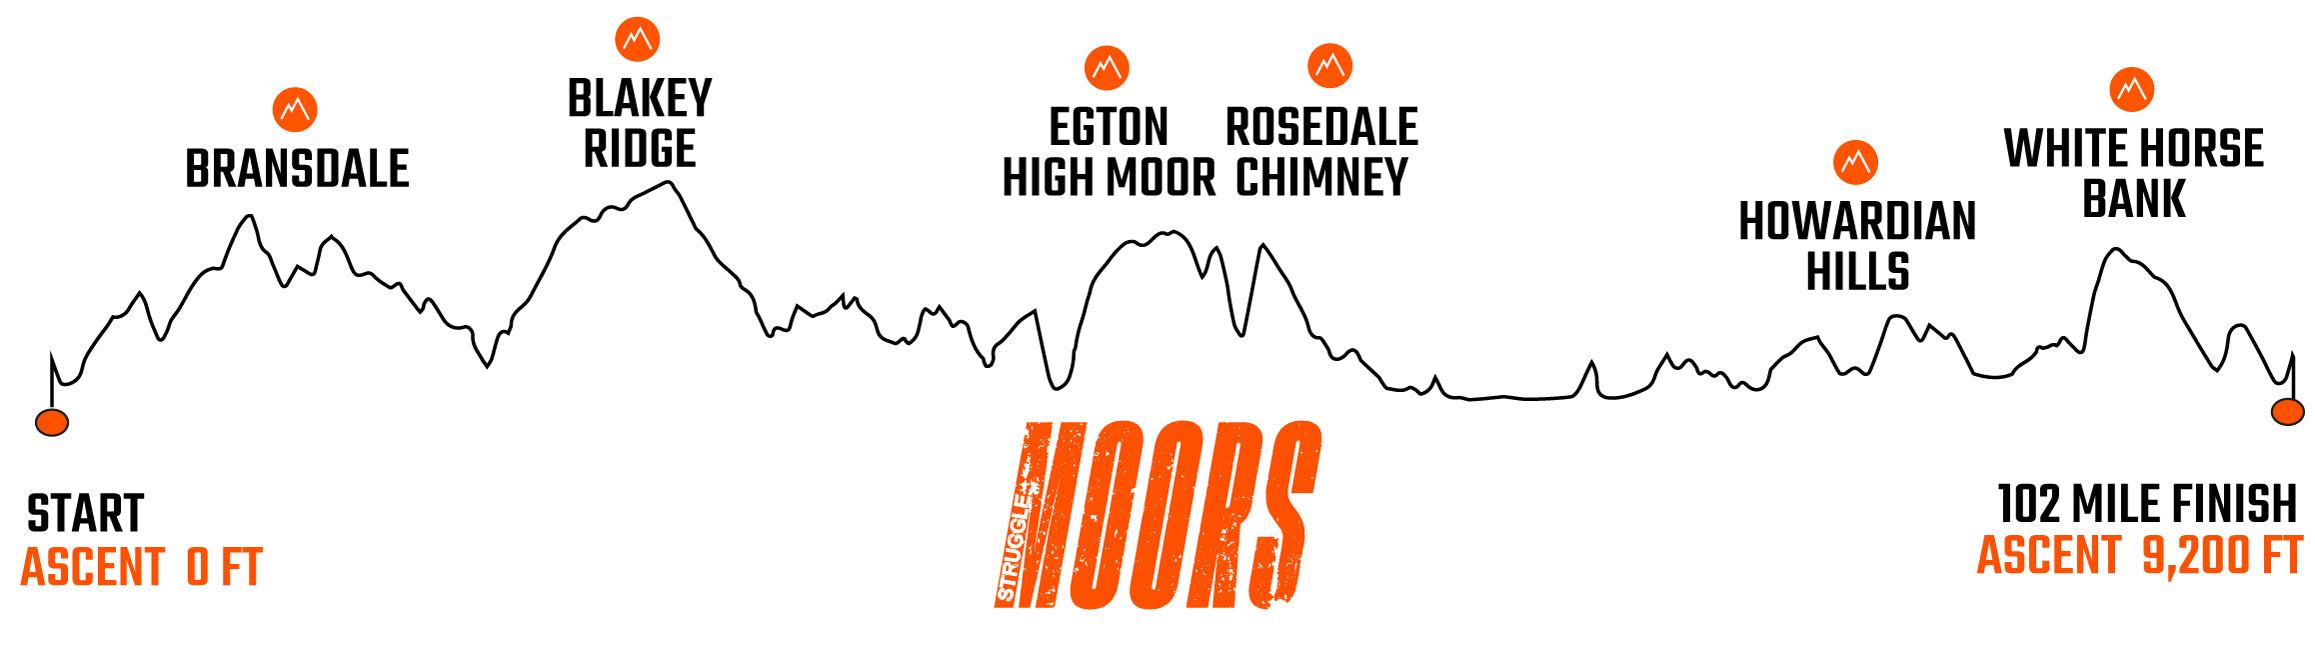 Struggle Moors sportive elevation profile